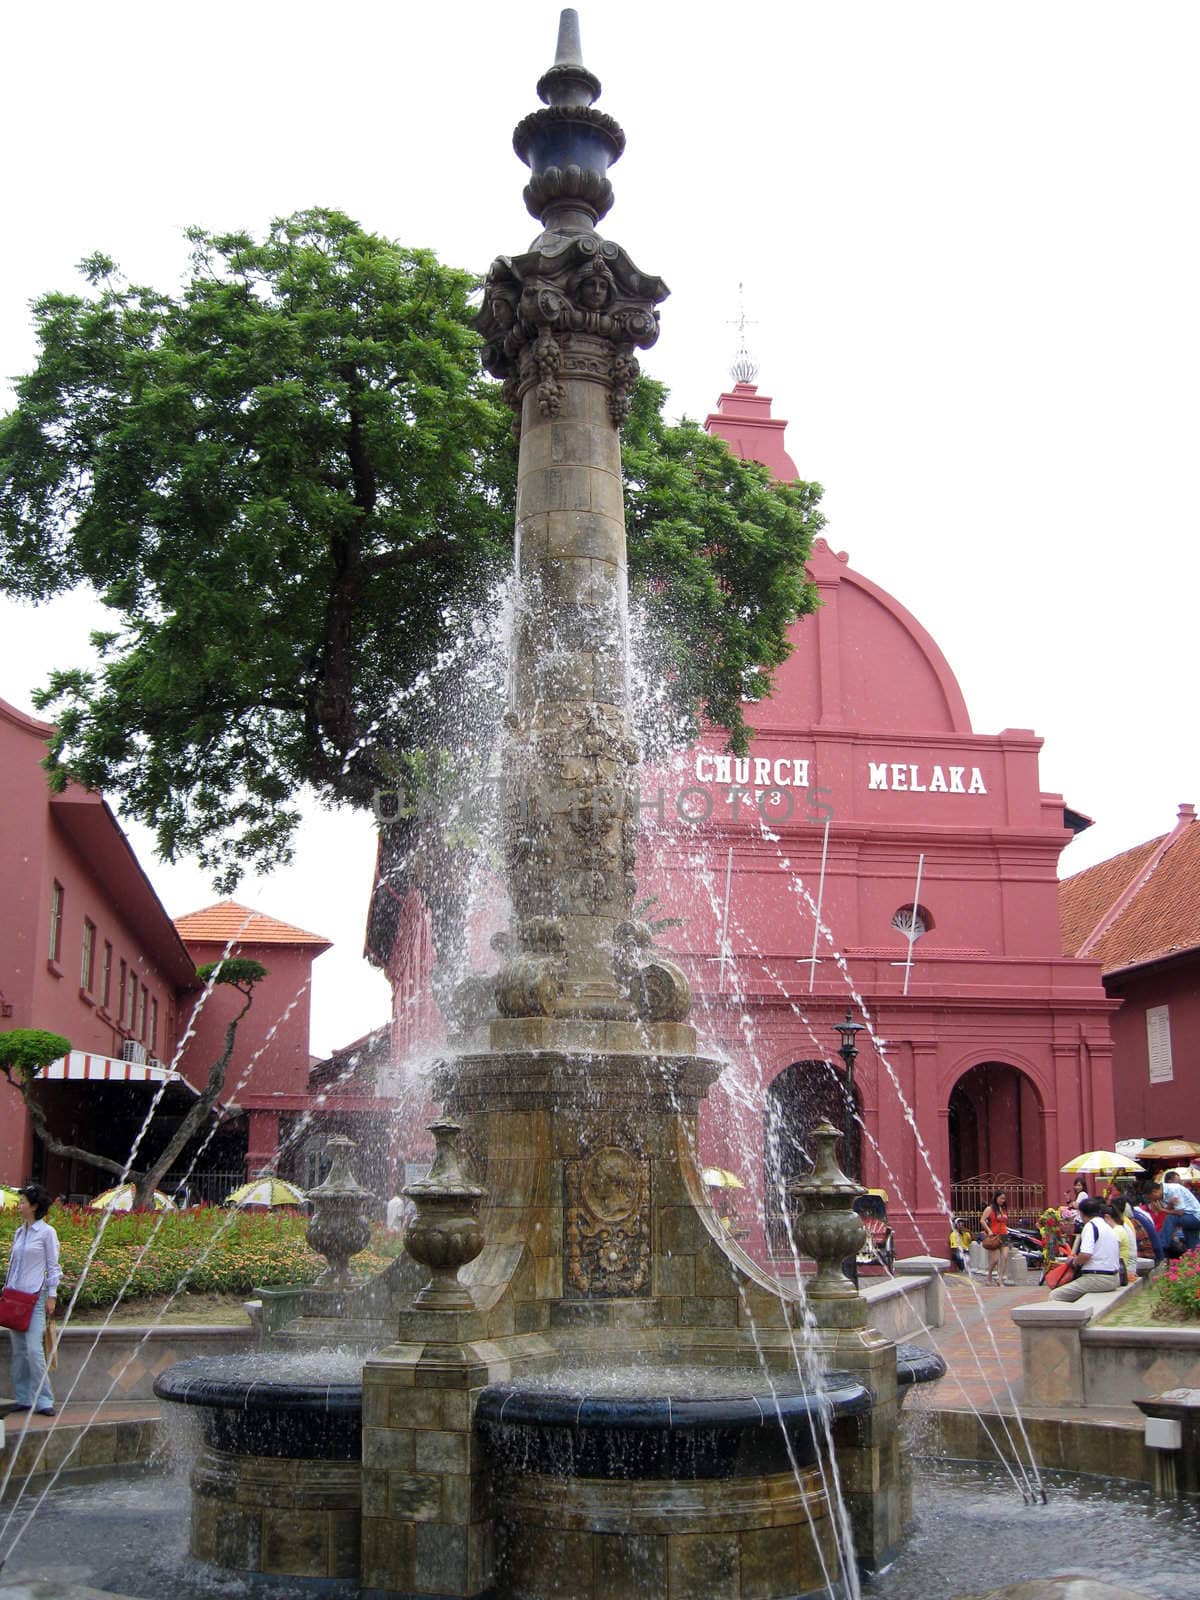 a fountain in front of melaka church